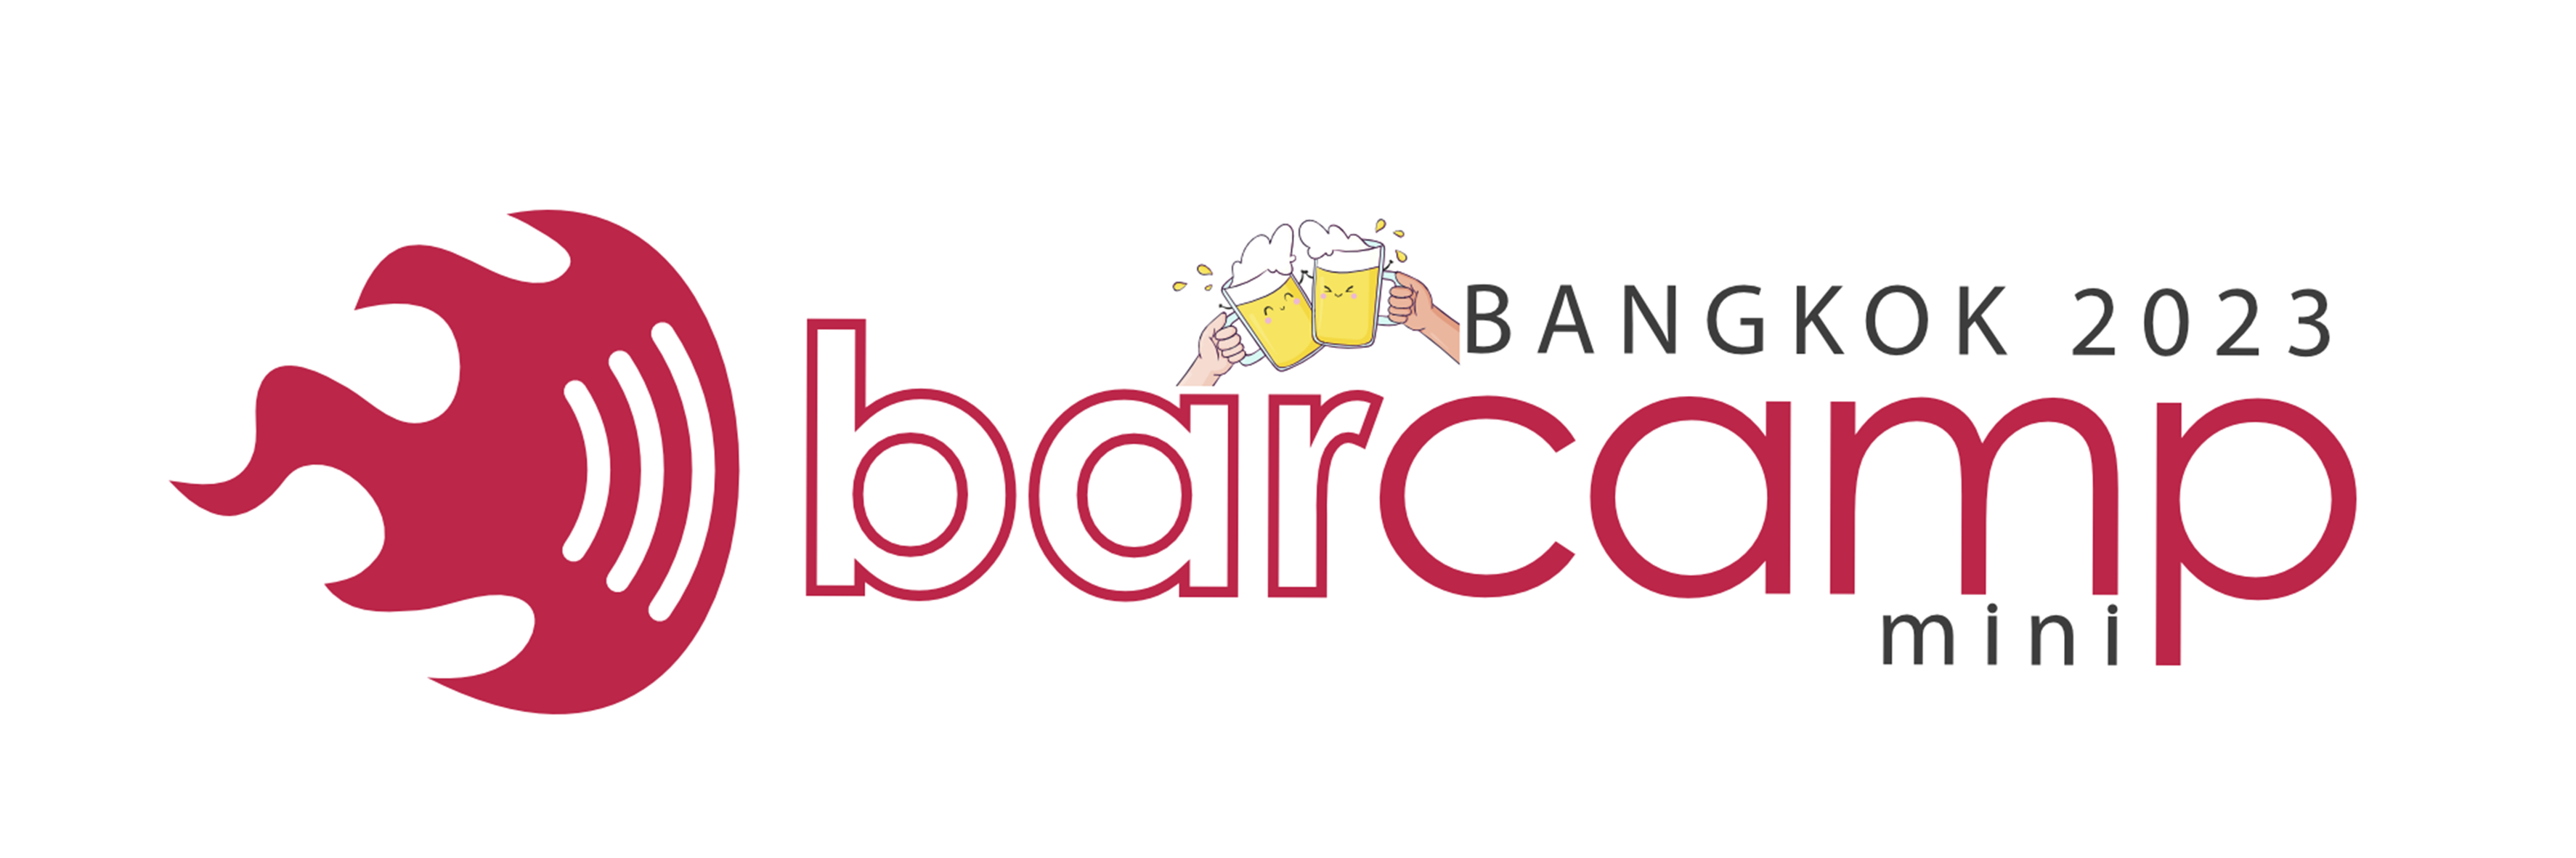 Barcamp Bangkok 2023 mini